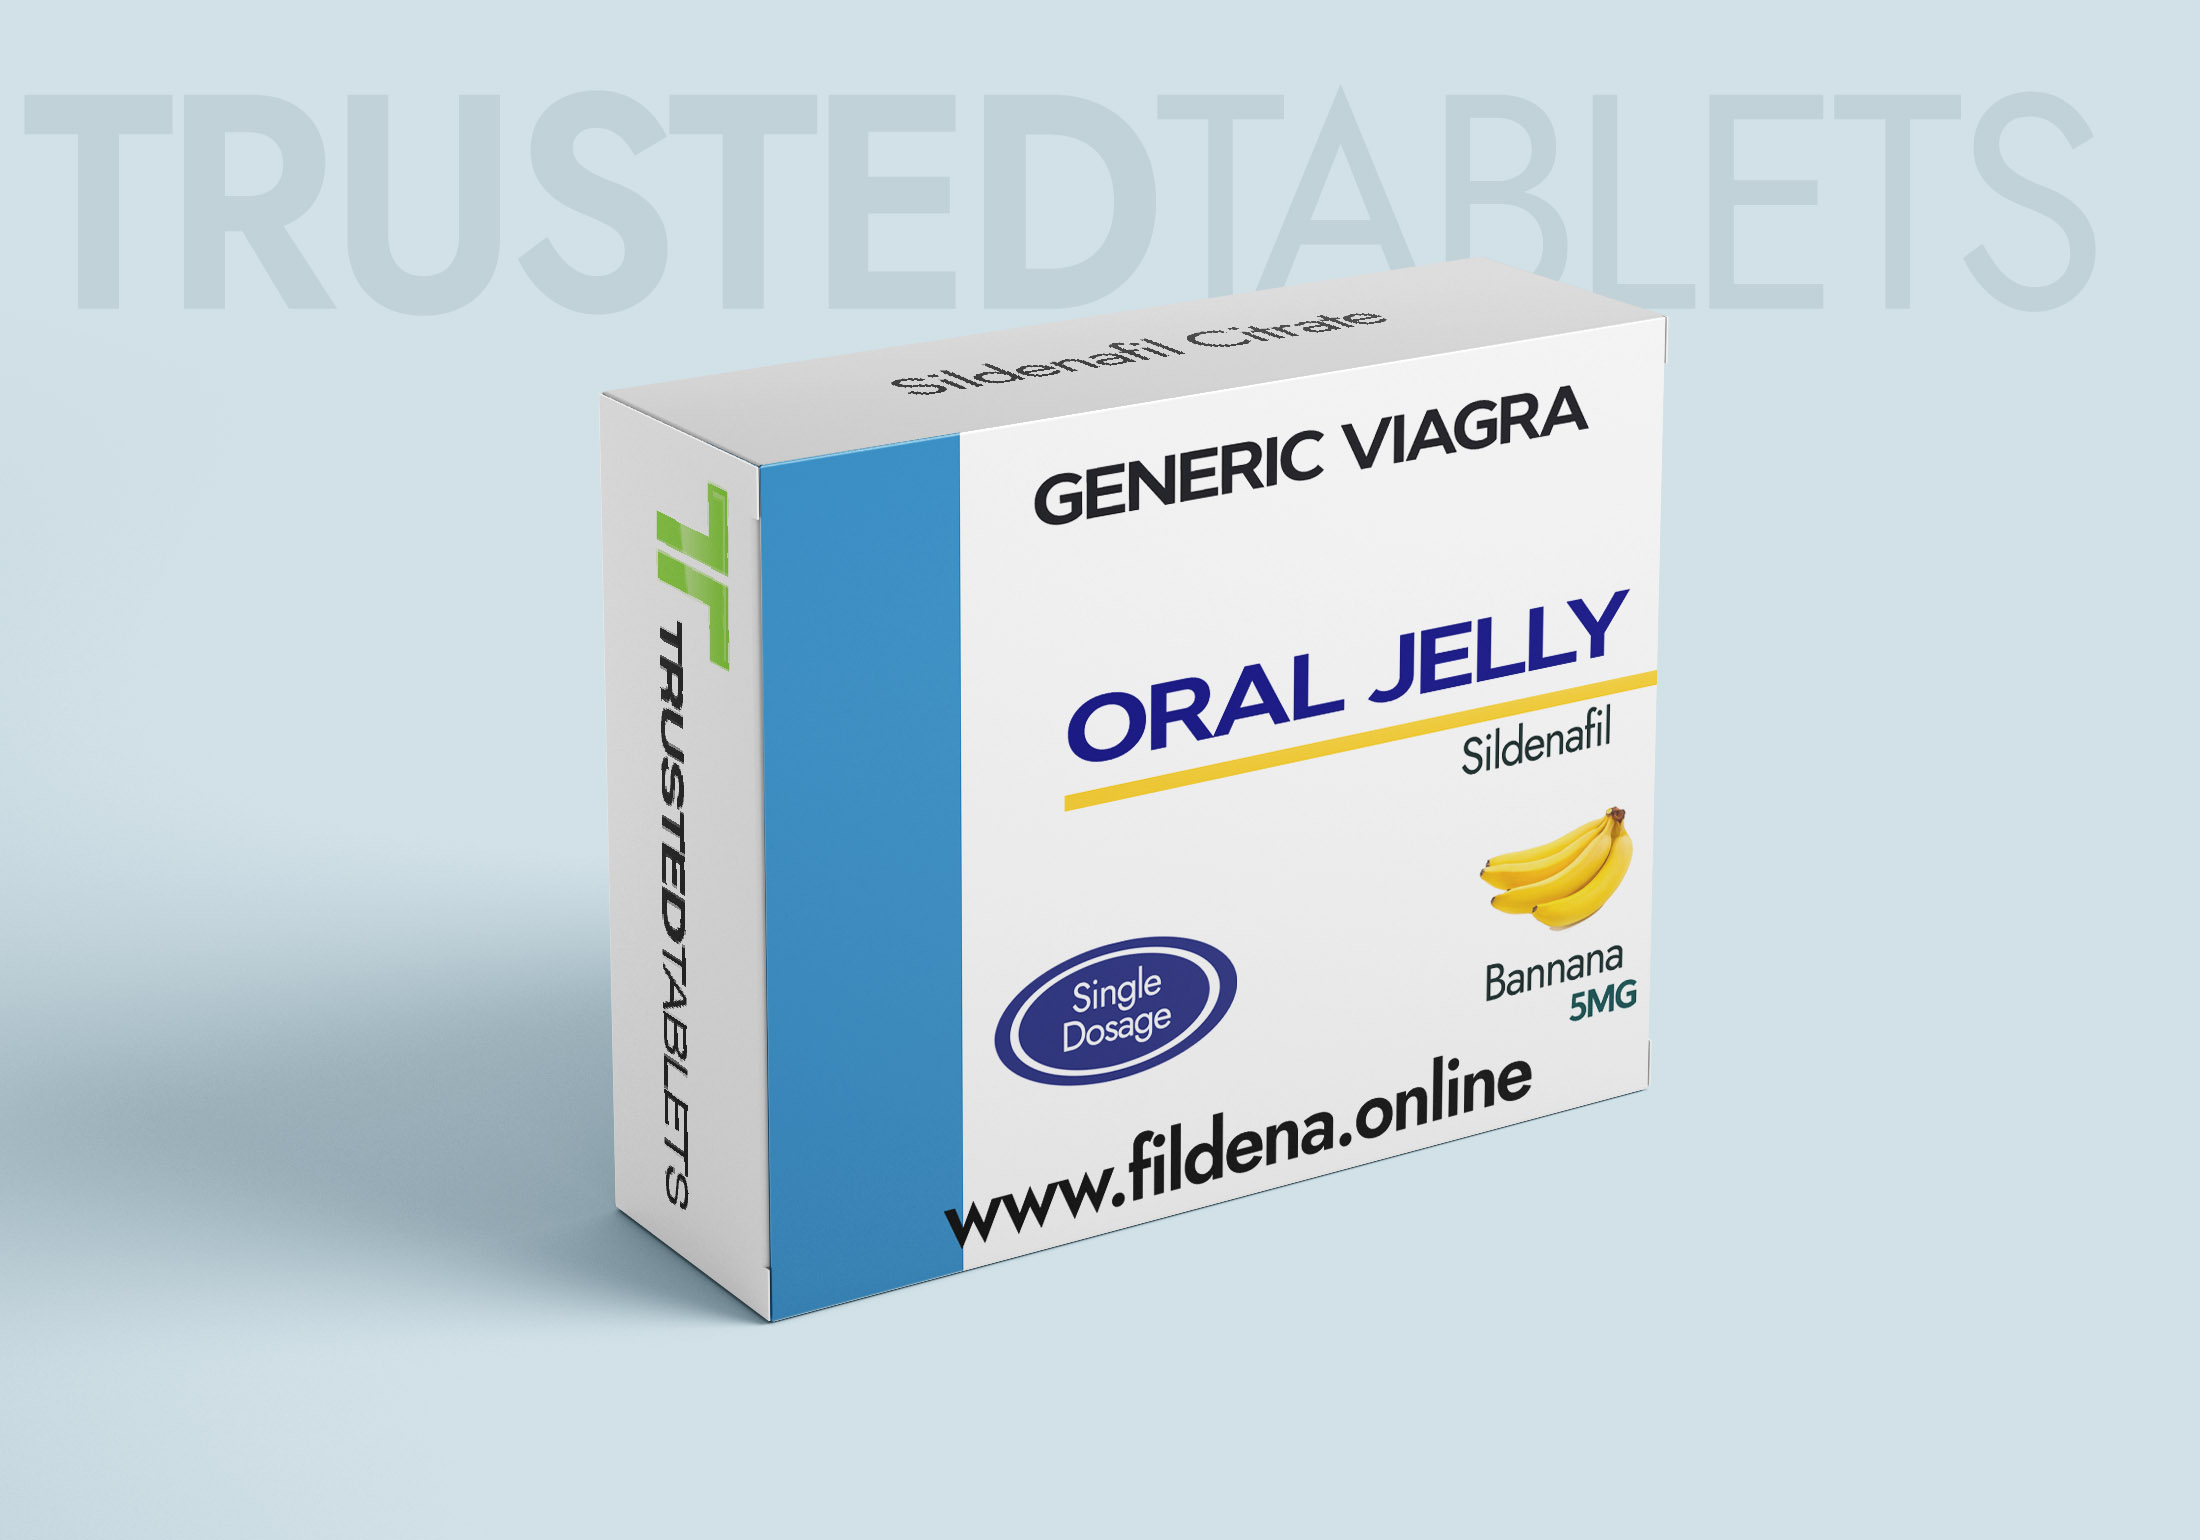 Viagra Oral Jelly TrustedTablets